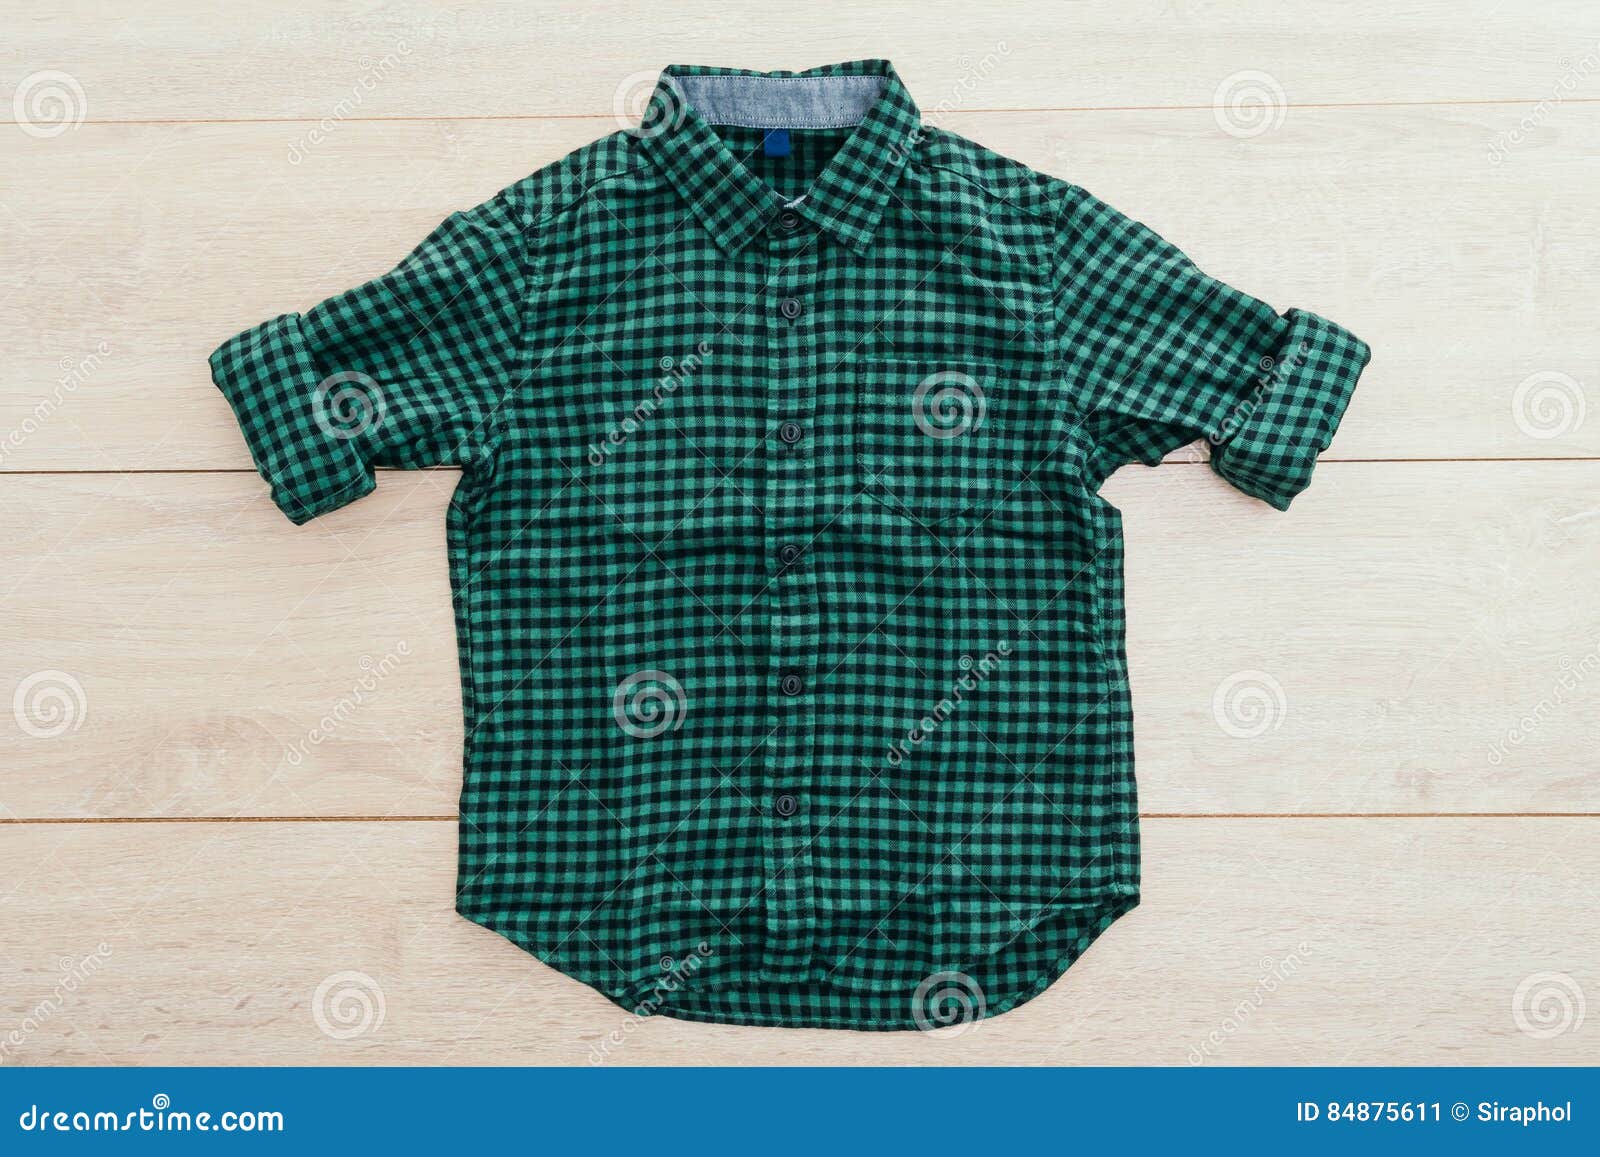 Beautiful Men Fashion Shirt Stock Image - Image of blue, clothes: 84875611